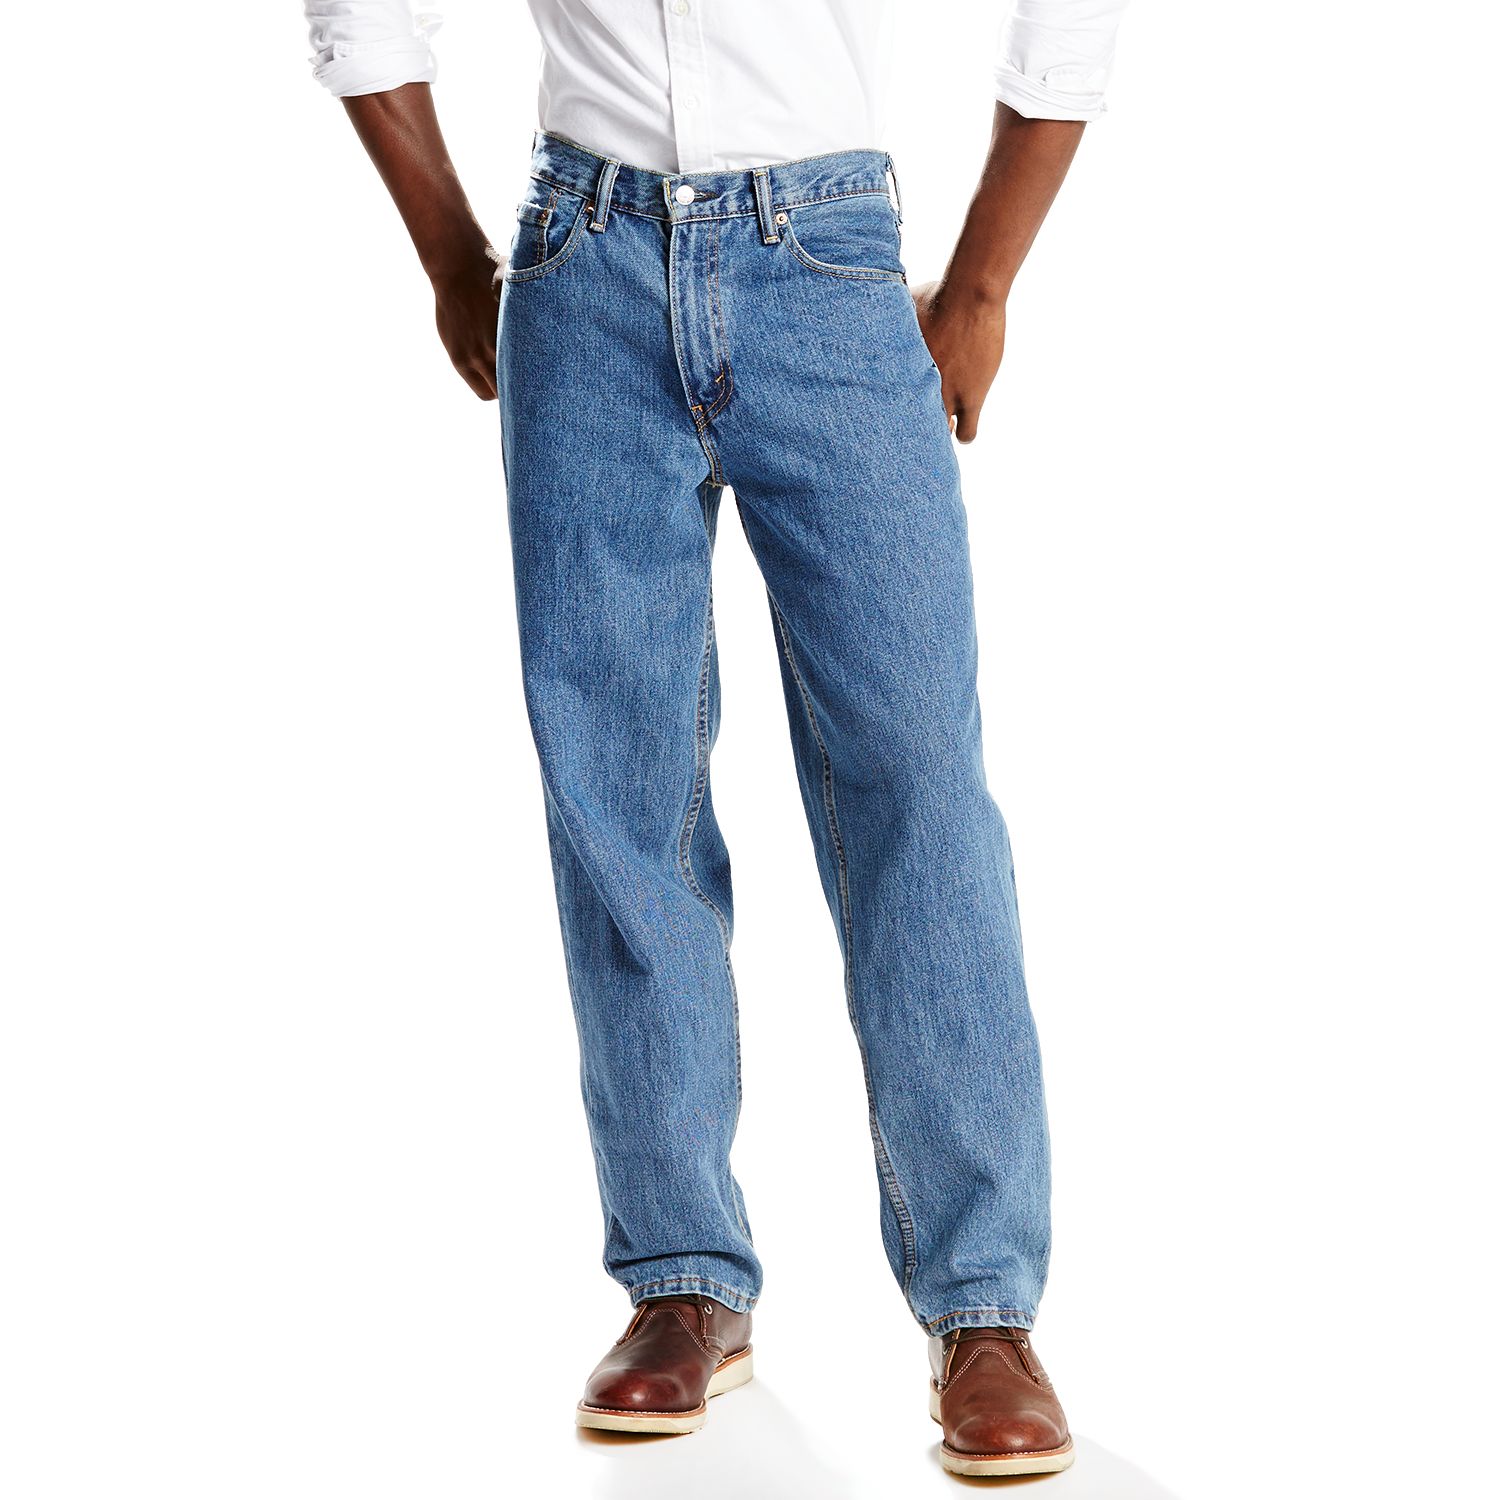 560 levi jeans Cheaper Than Retail 